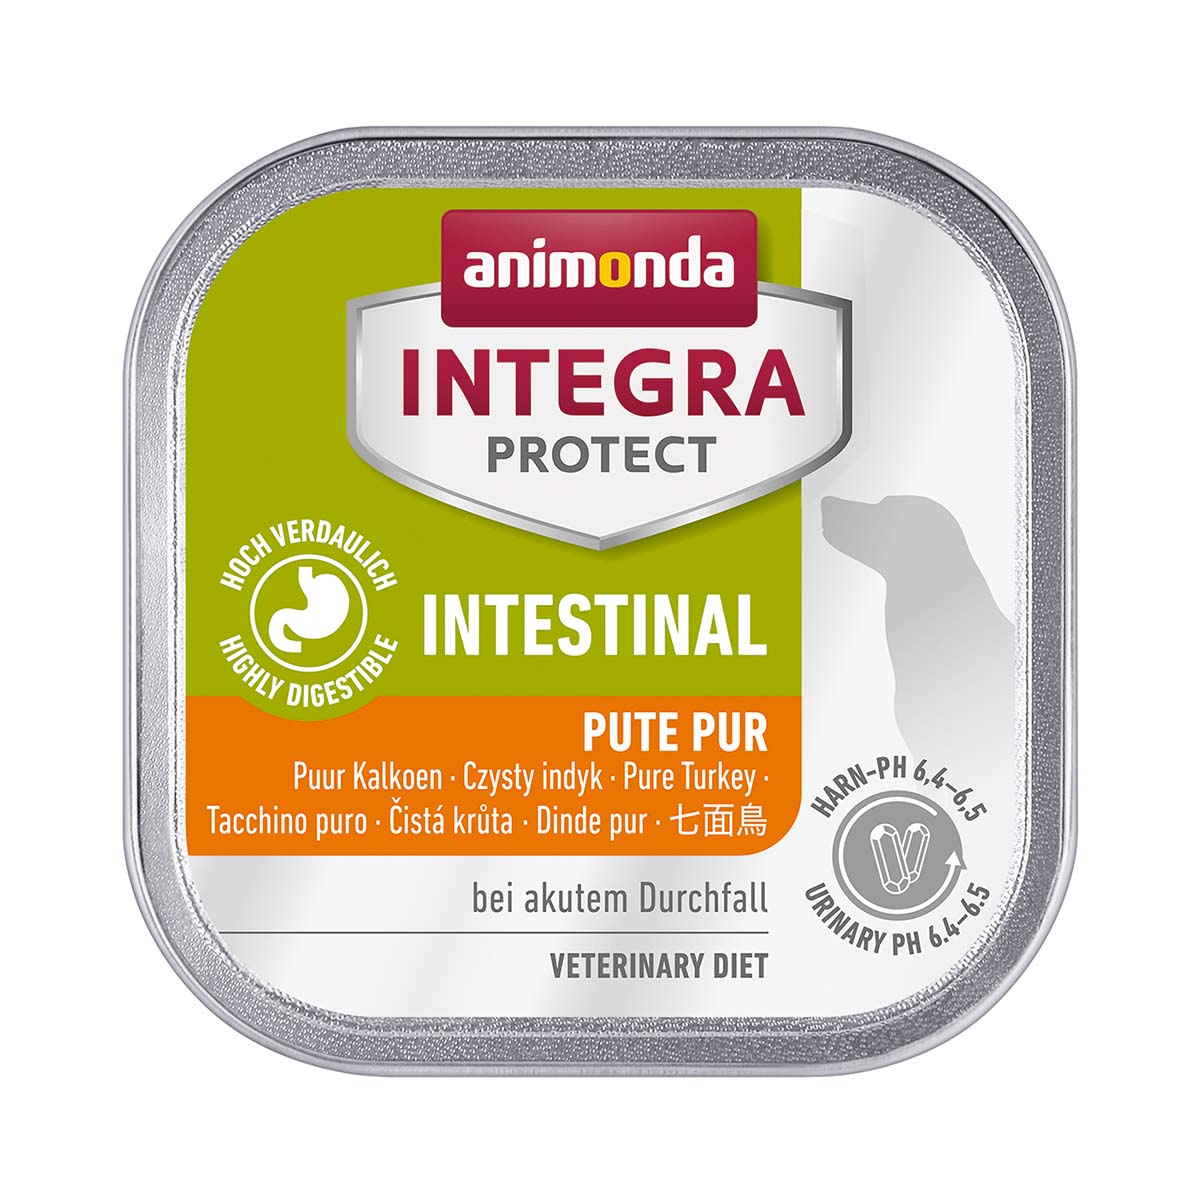 animonda Integra Protect Intestinal 22x150g von animonda Integra Protect